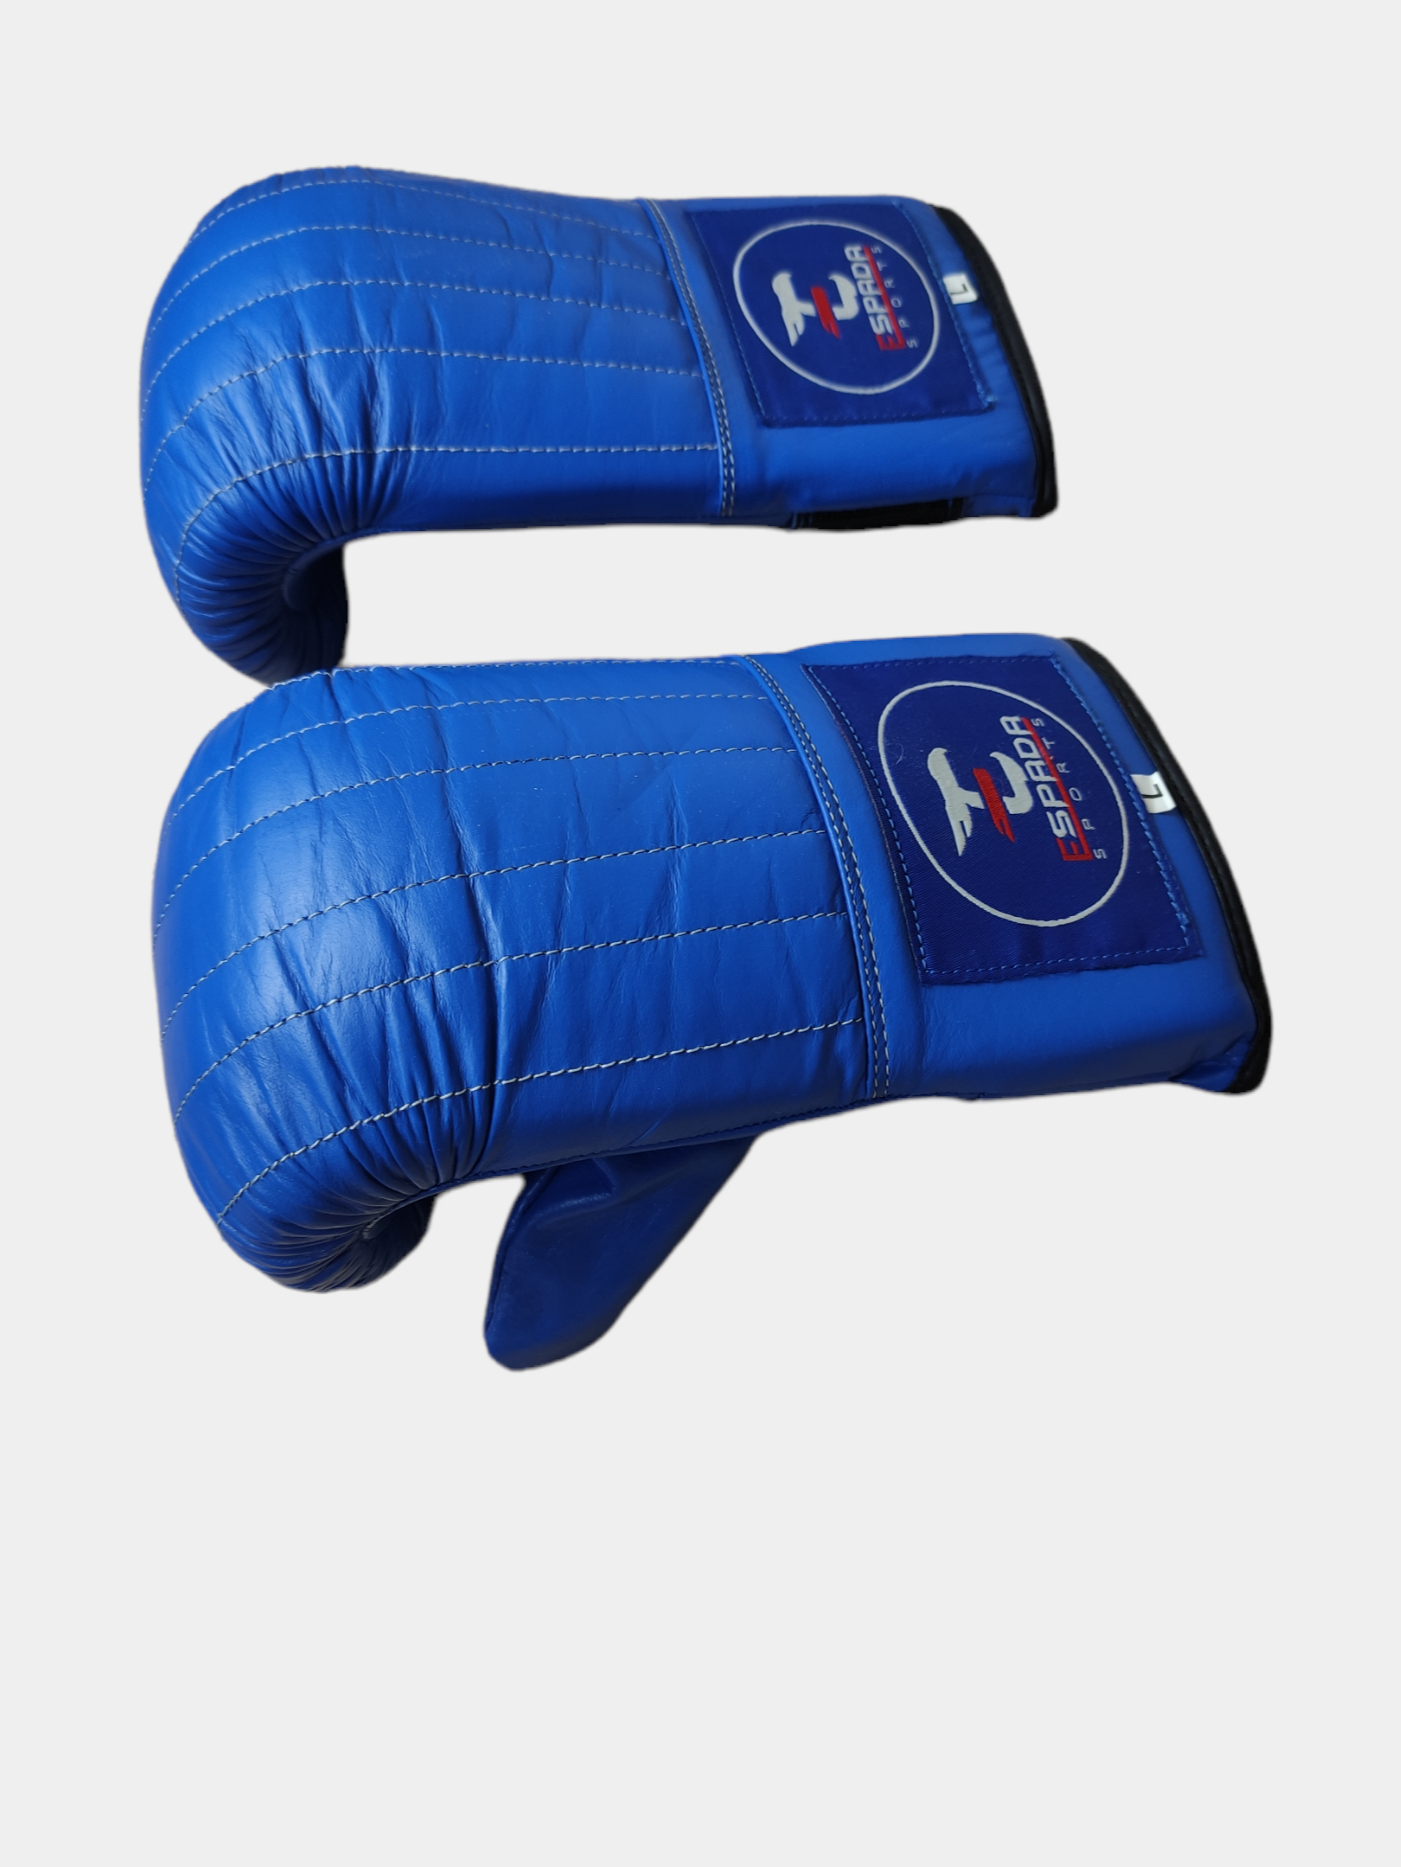  перчатки для бокса  по цене 900 ₽ в е .